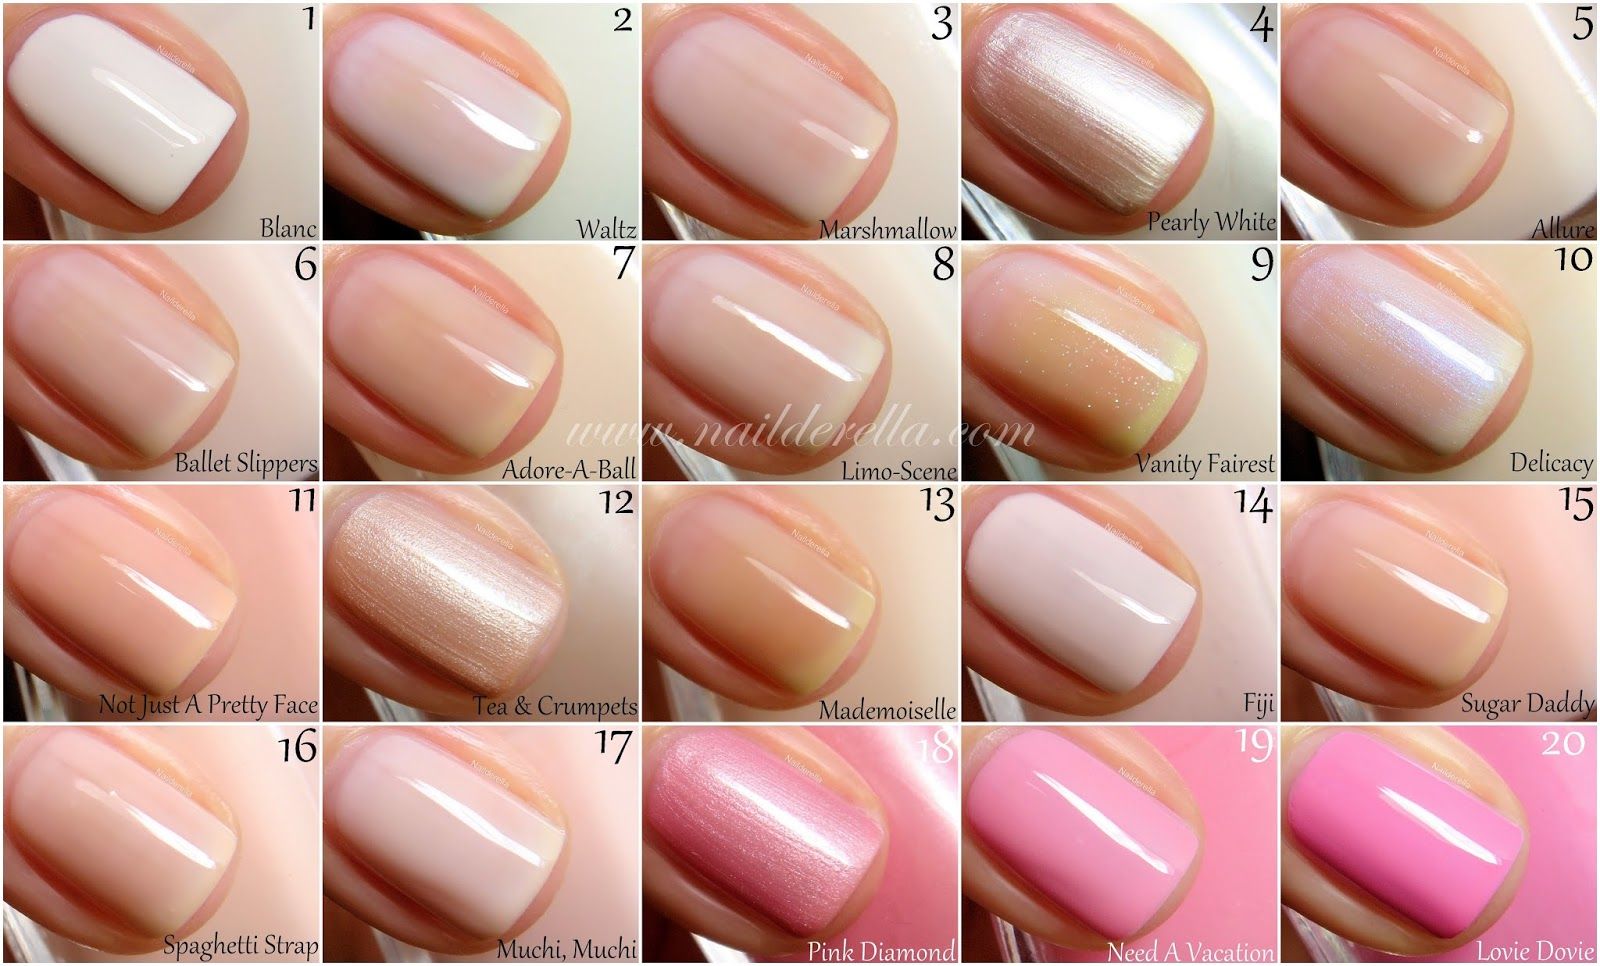 Essie Color Guide 1 100 Essie Nail Polish Colors Essie Nail Colors Essie Pink Nail Polish